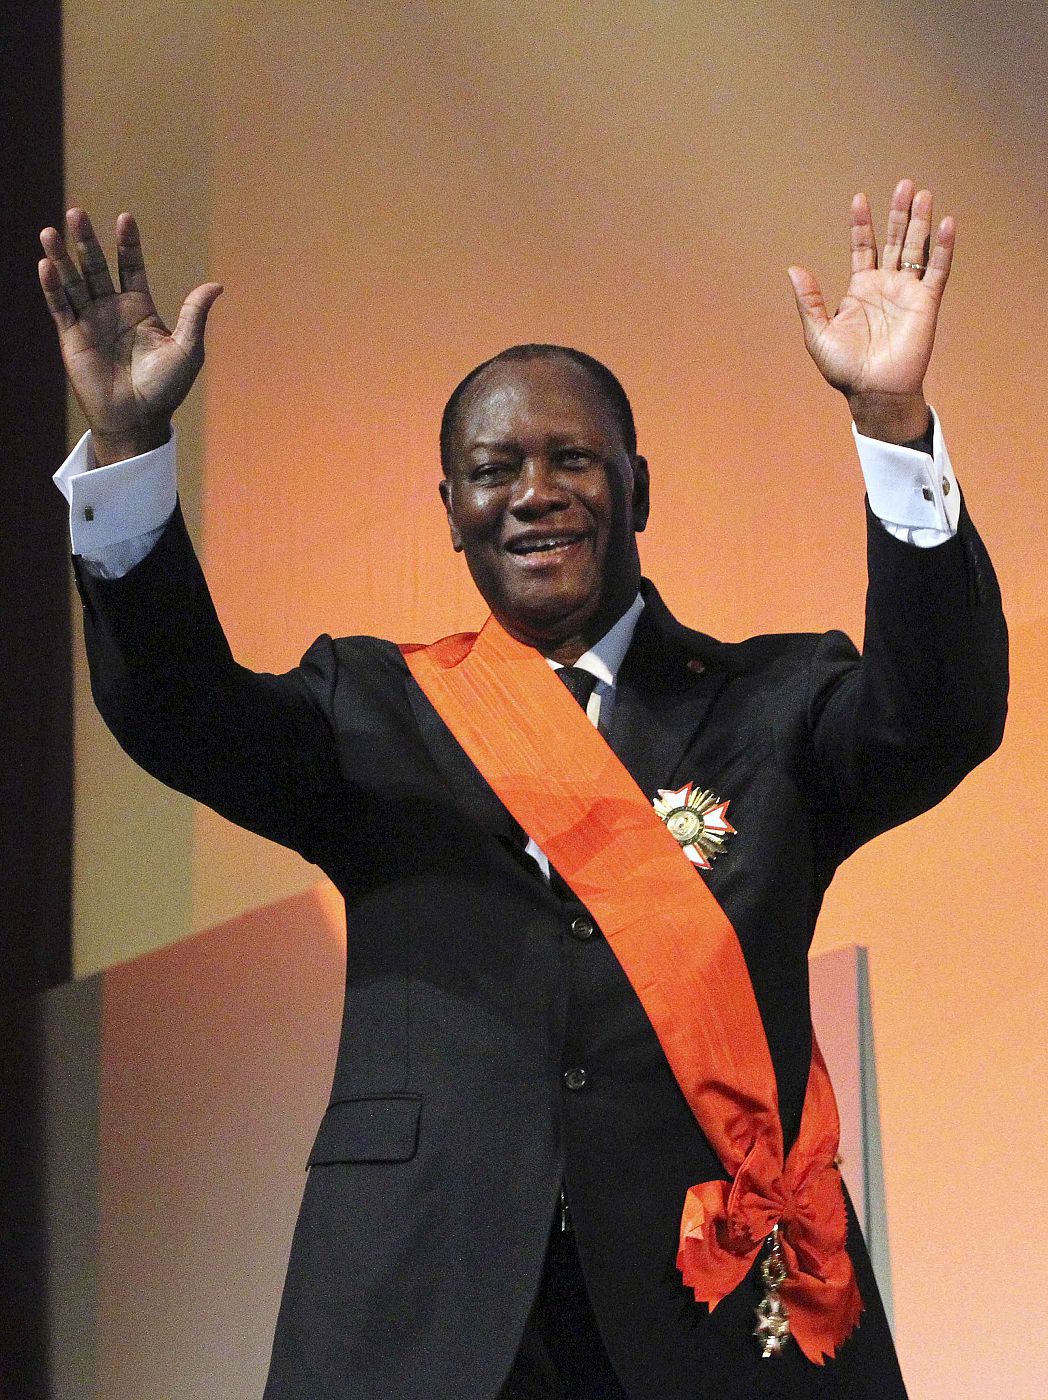 Ivory Coast President Alassane Ouattara waves during his inauguration ceremony at the Felix Houphouet-Boigny Foundation in Yamoussoukro